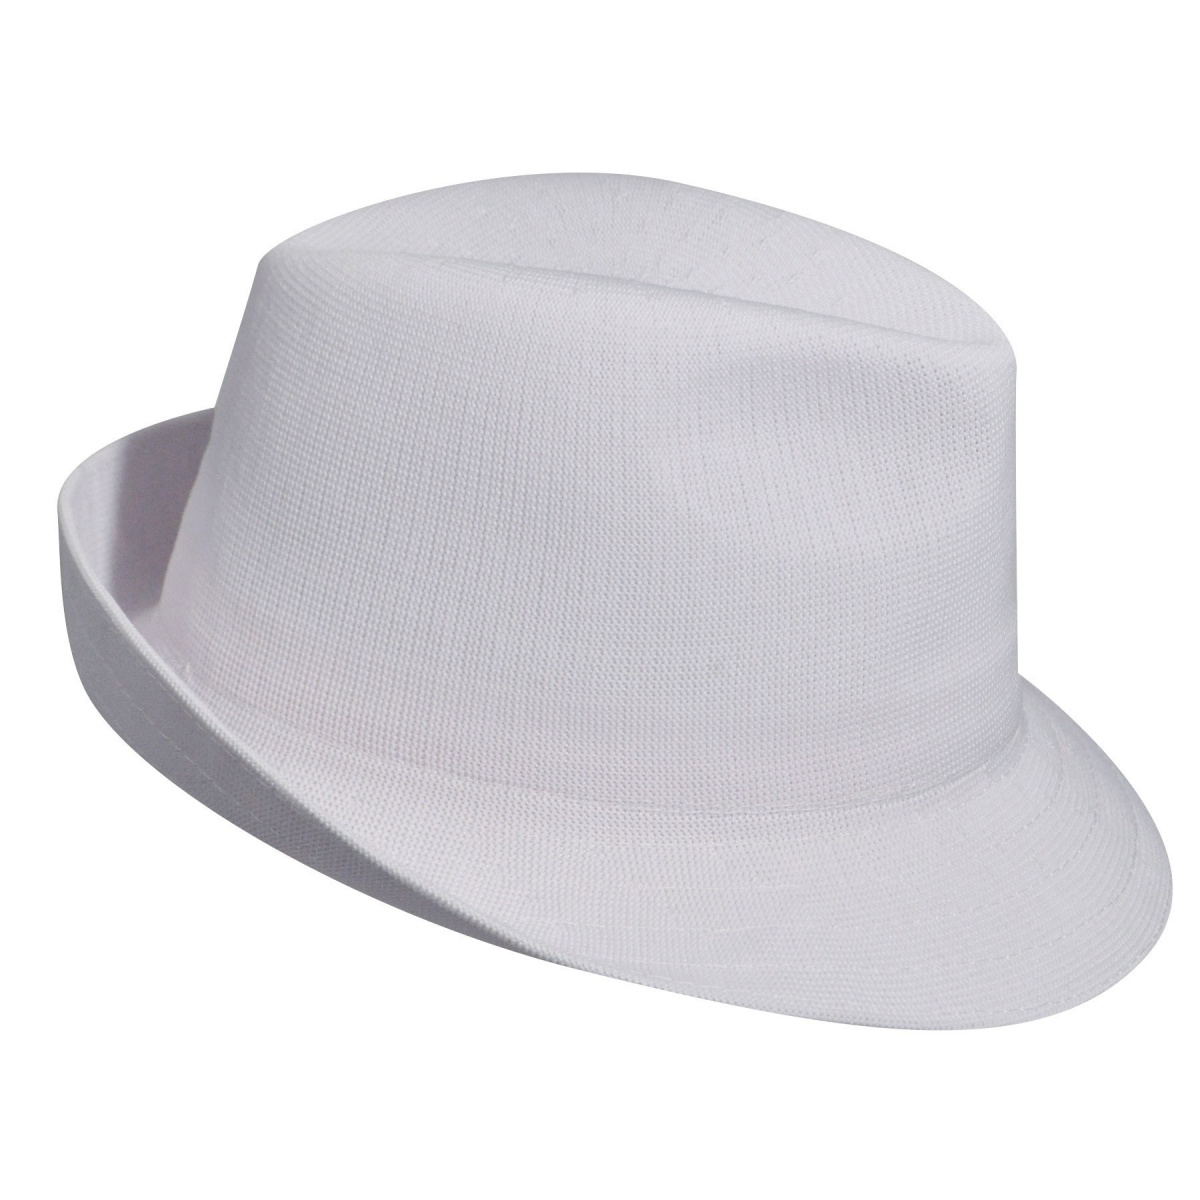 Trilby Hiro Kangol Hat - White